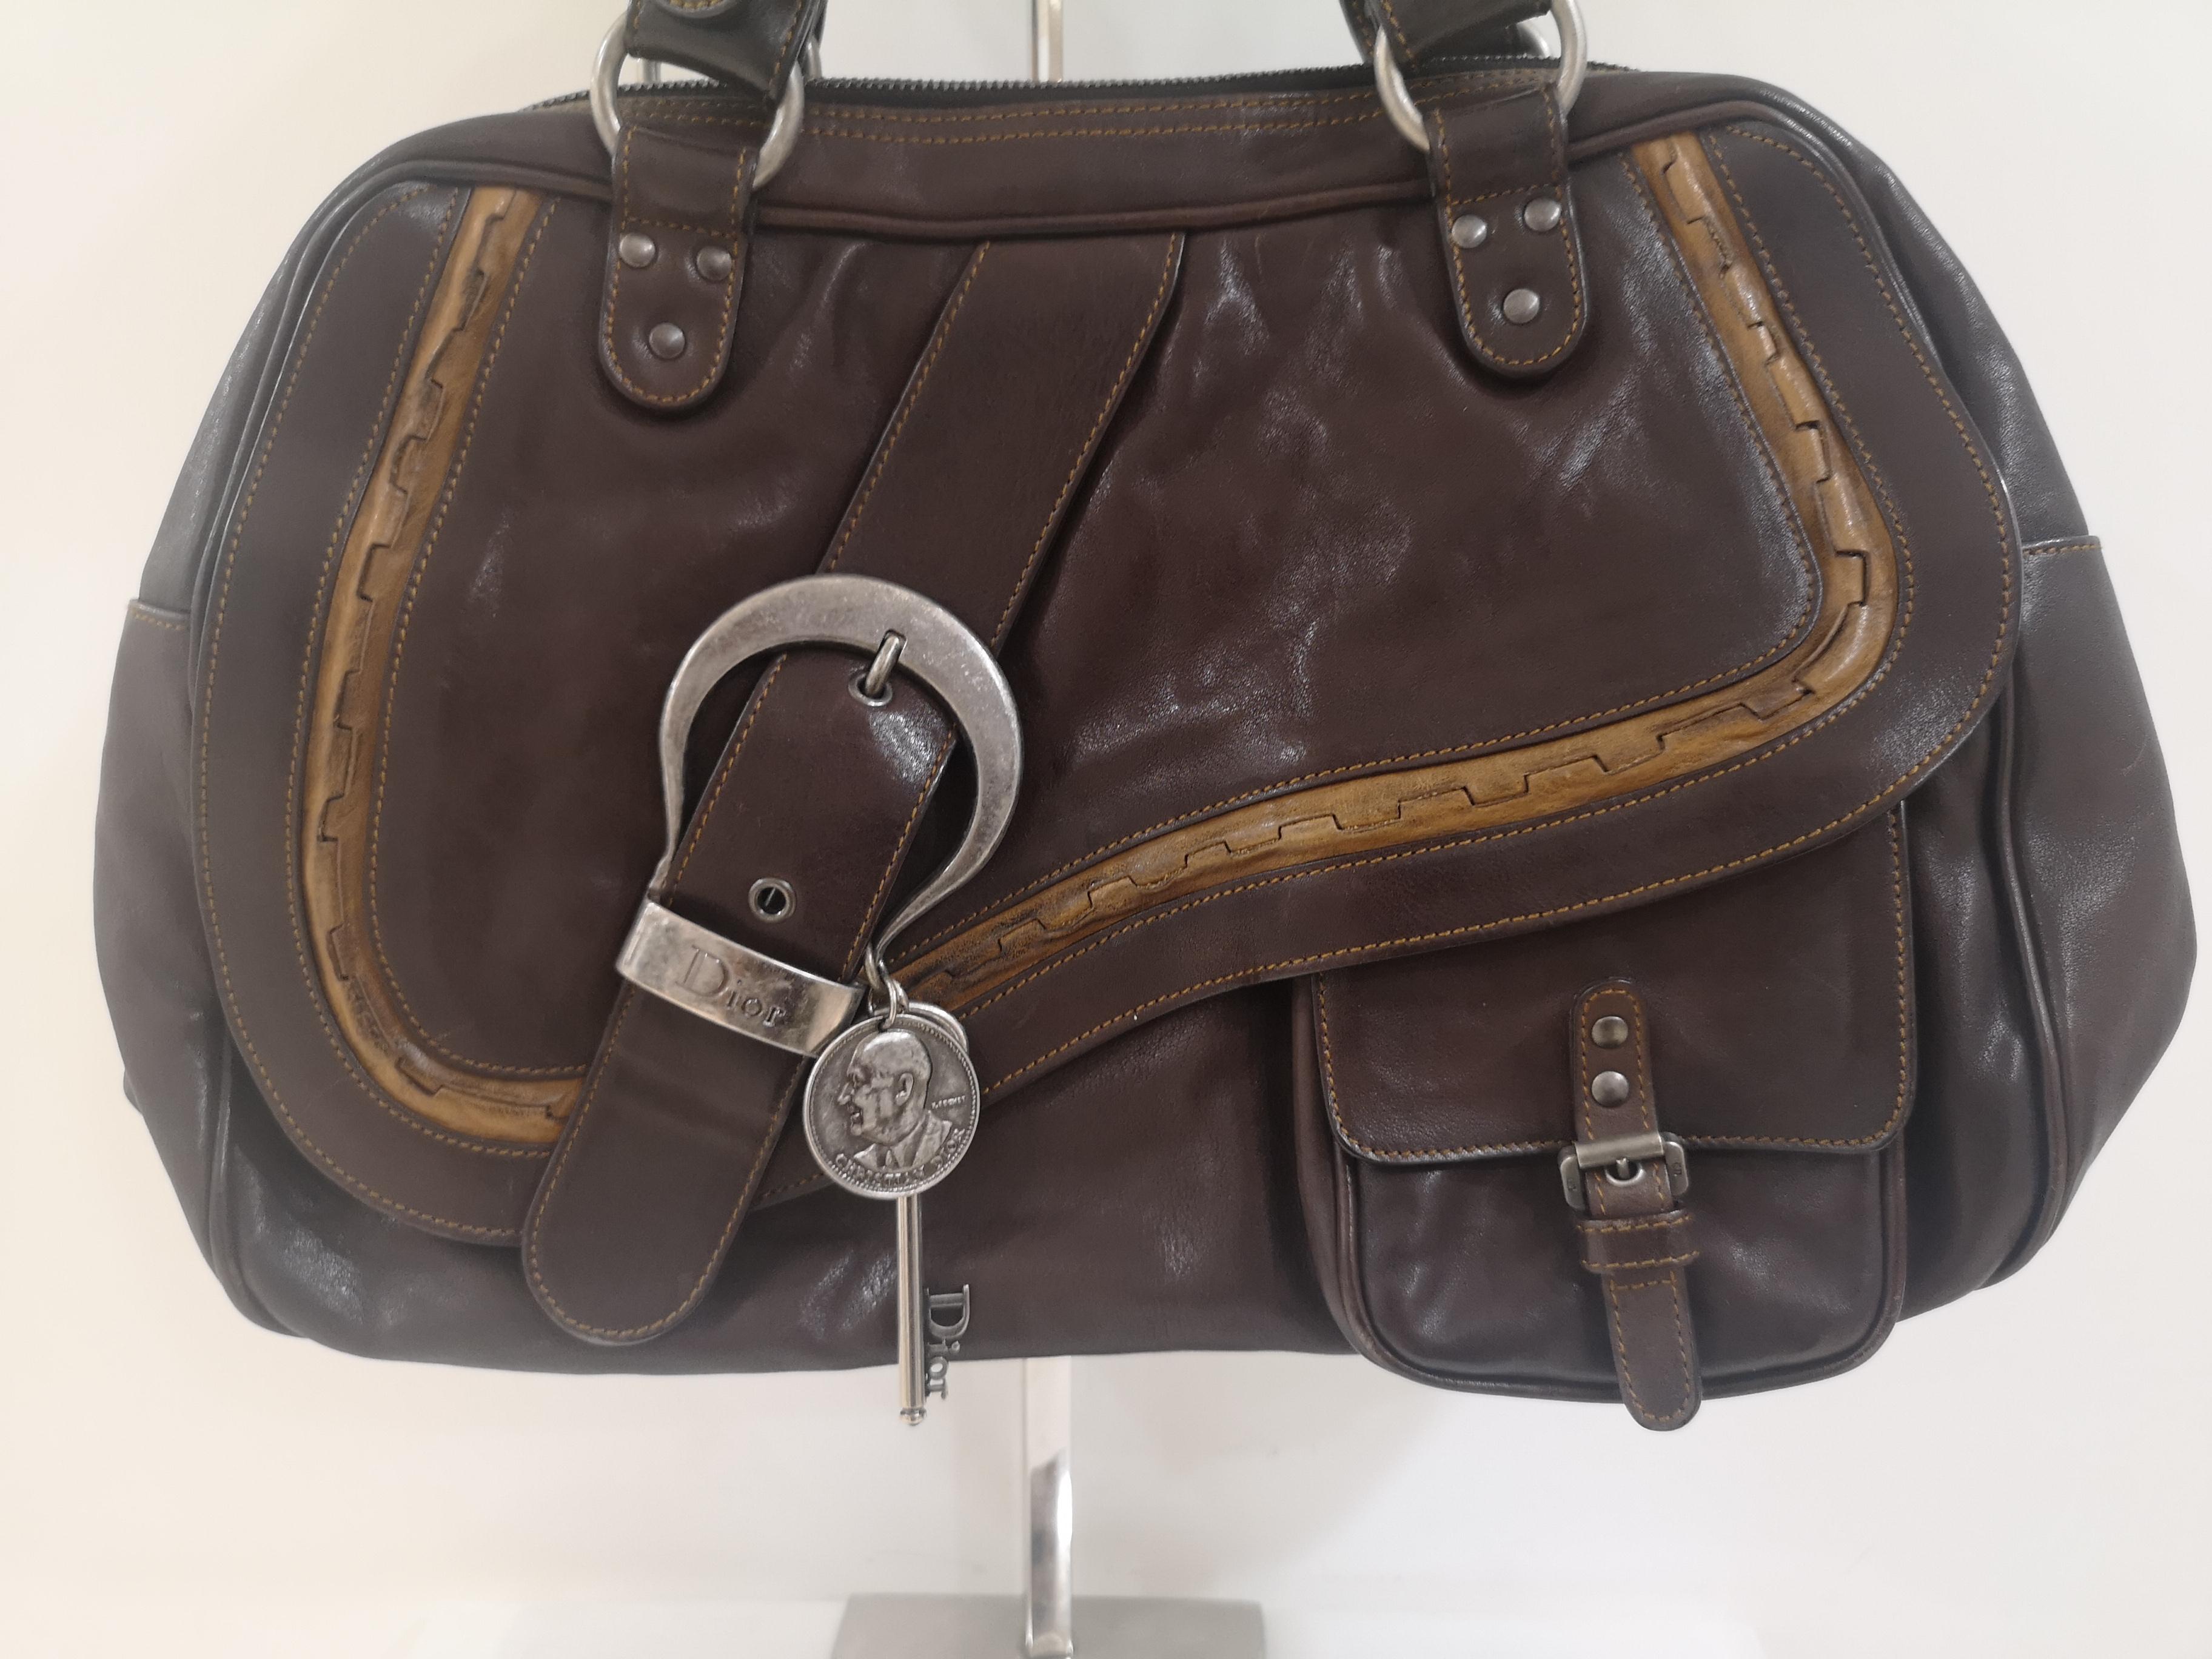 Christian Dior brown Gaucho shoulder bag
measurements: 38 * 25 cm 6 cm depth